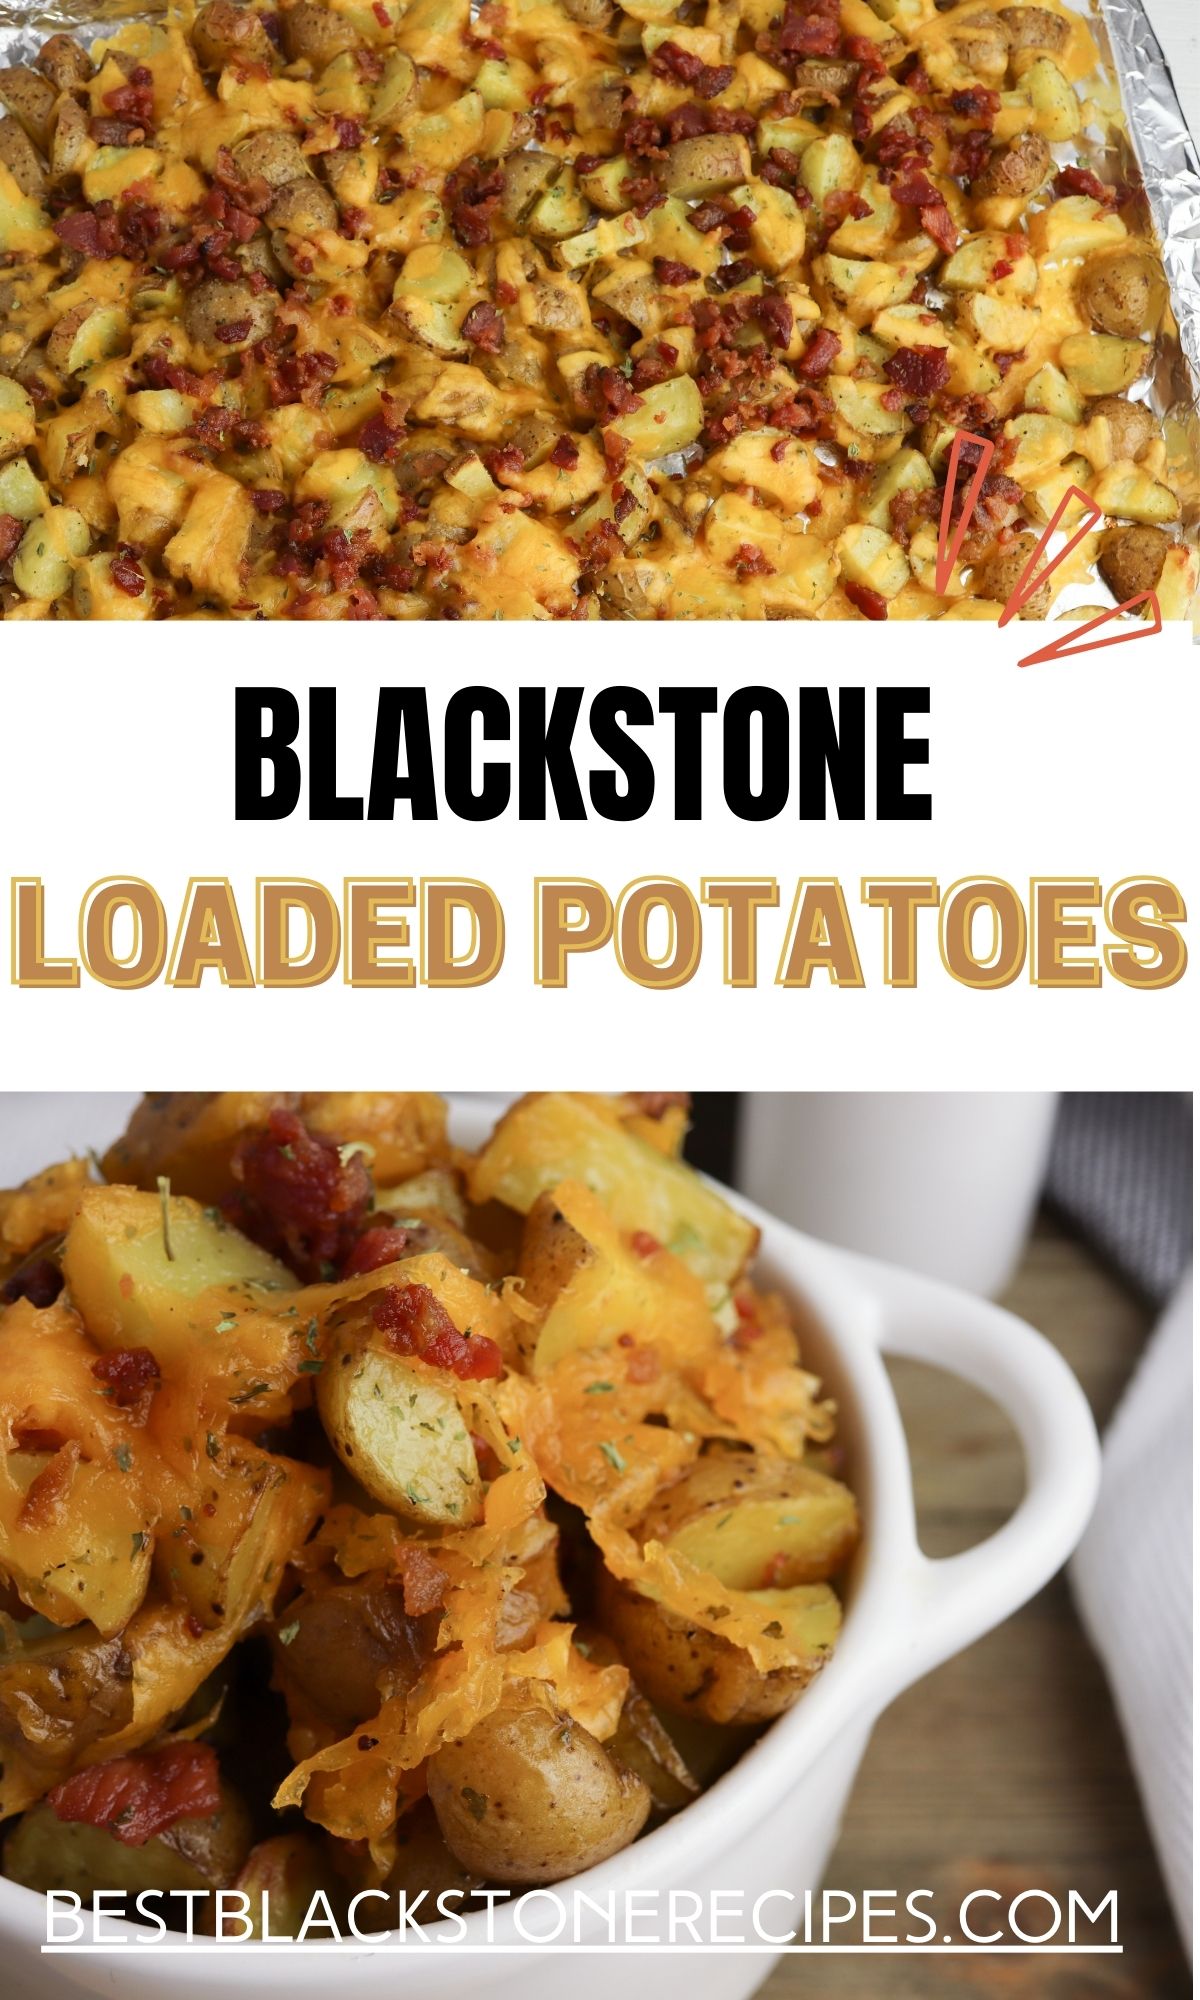 Blackstone loaded potatoes in tin foil.